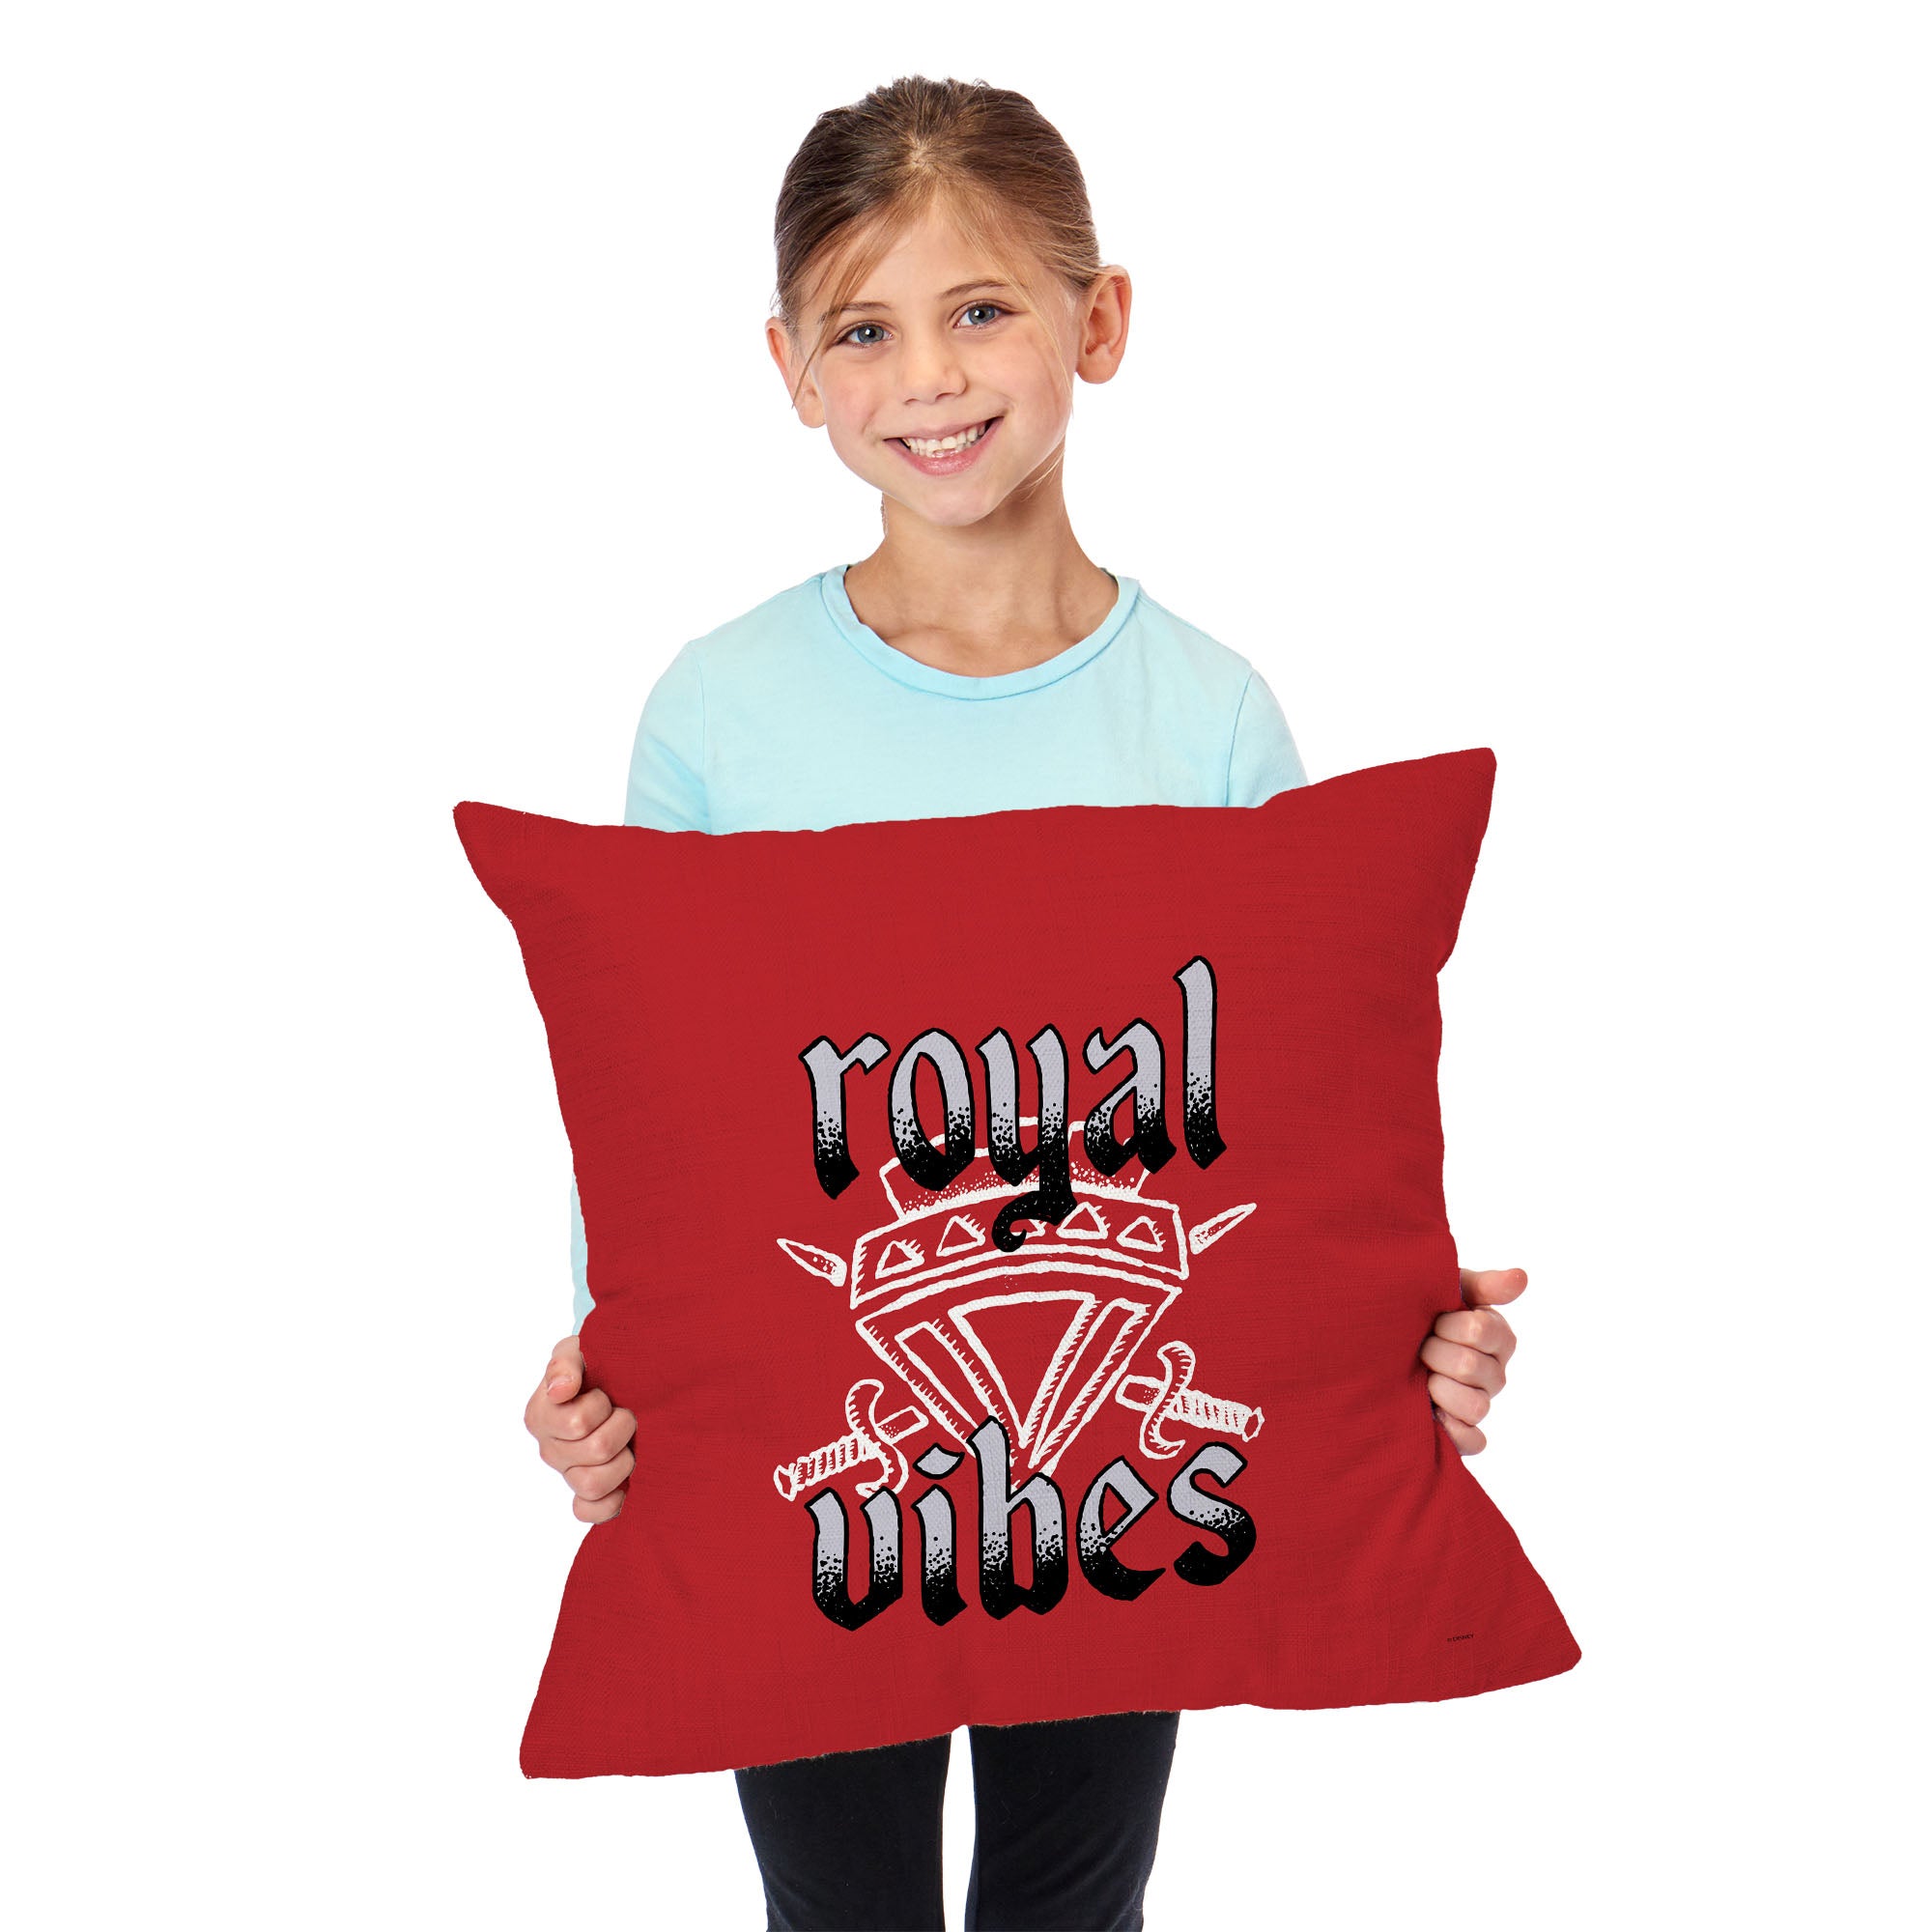 Disney Descendants 4 Royal Vibes Throw Pillow 18x18 Inches